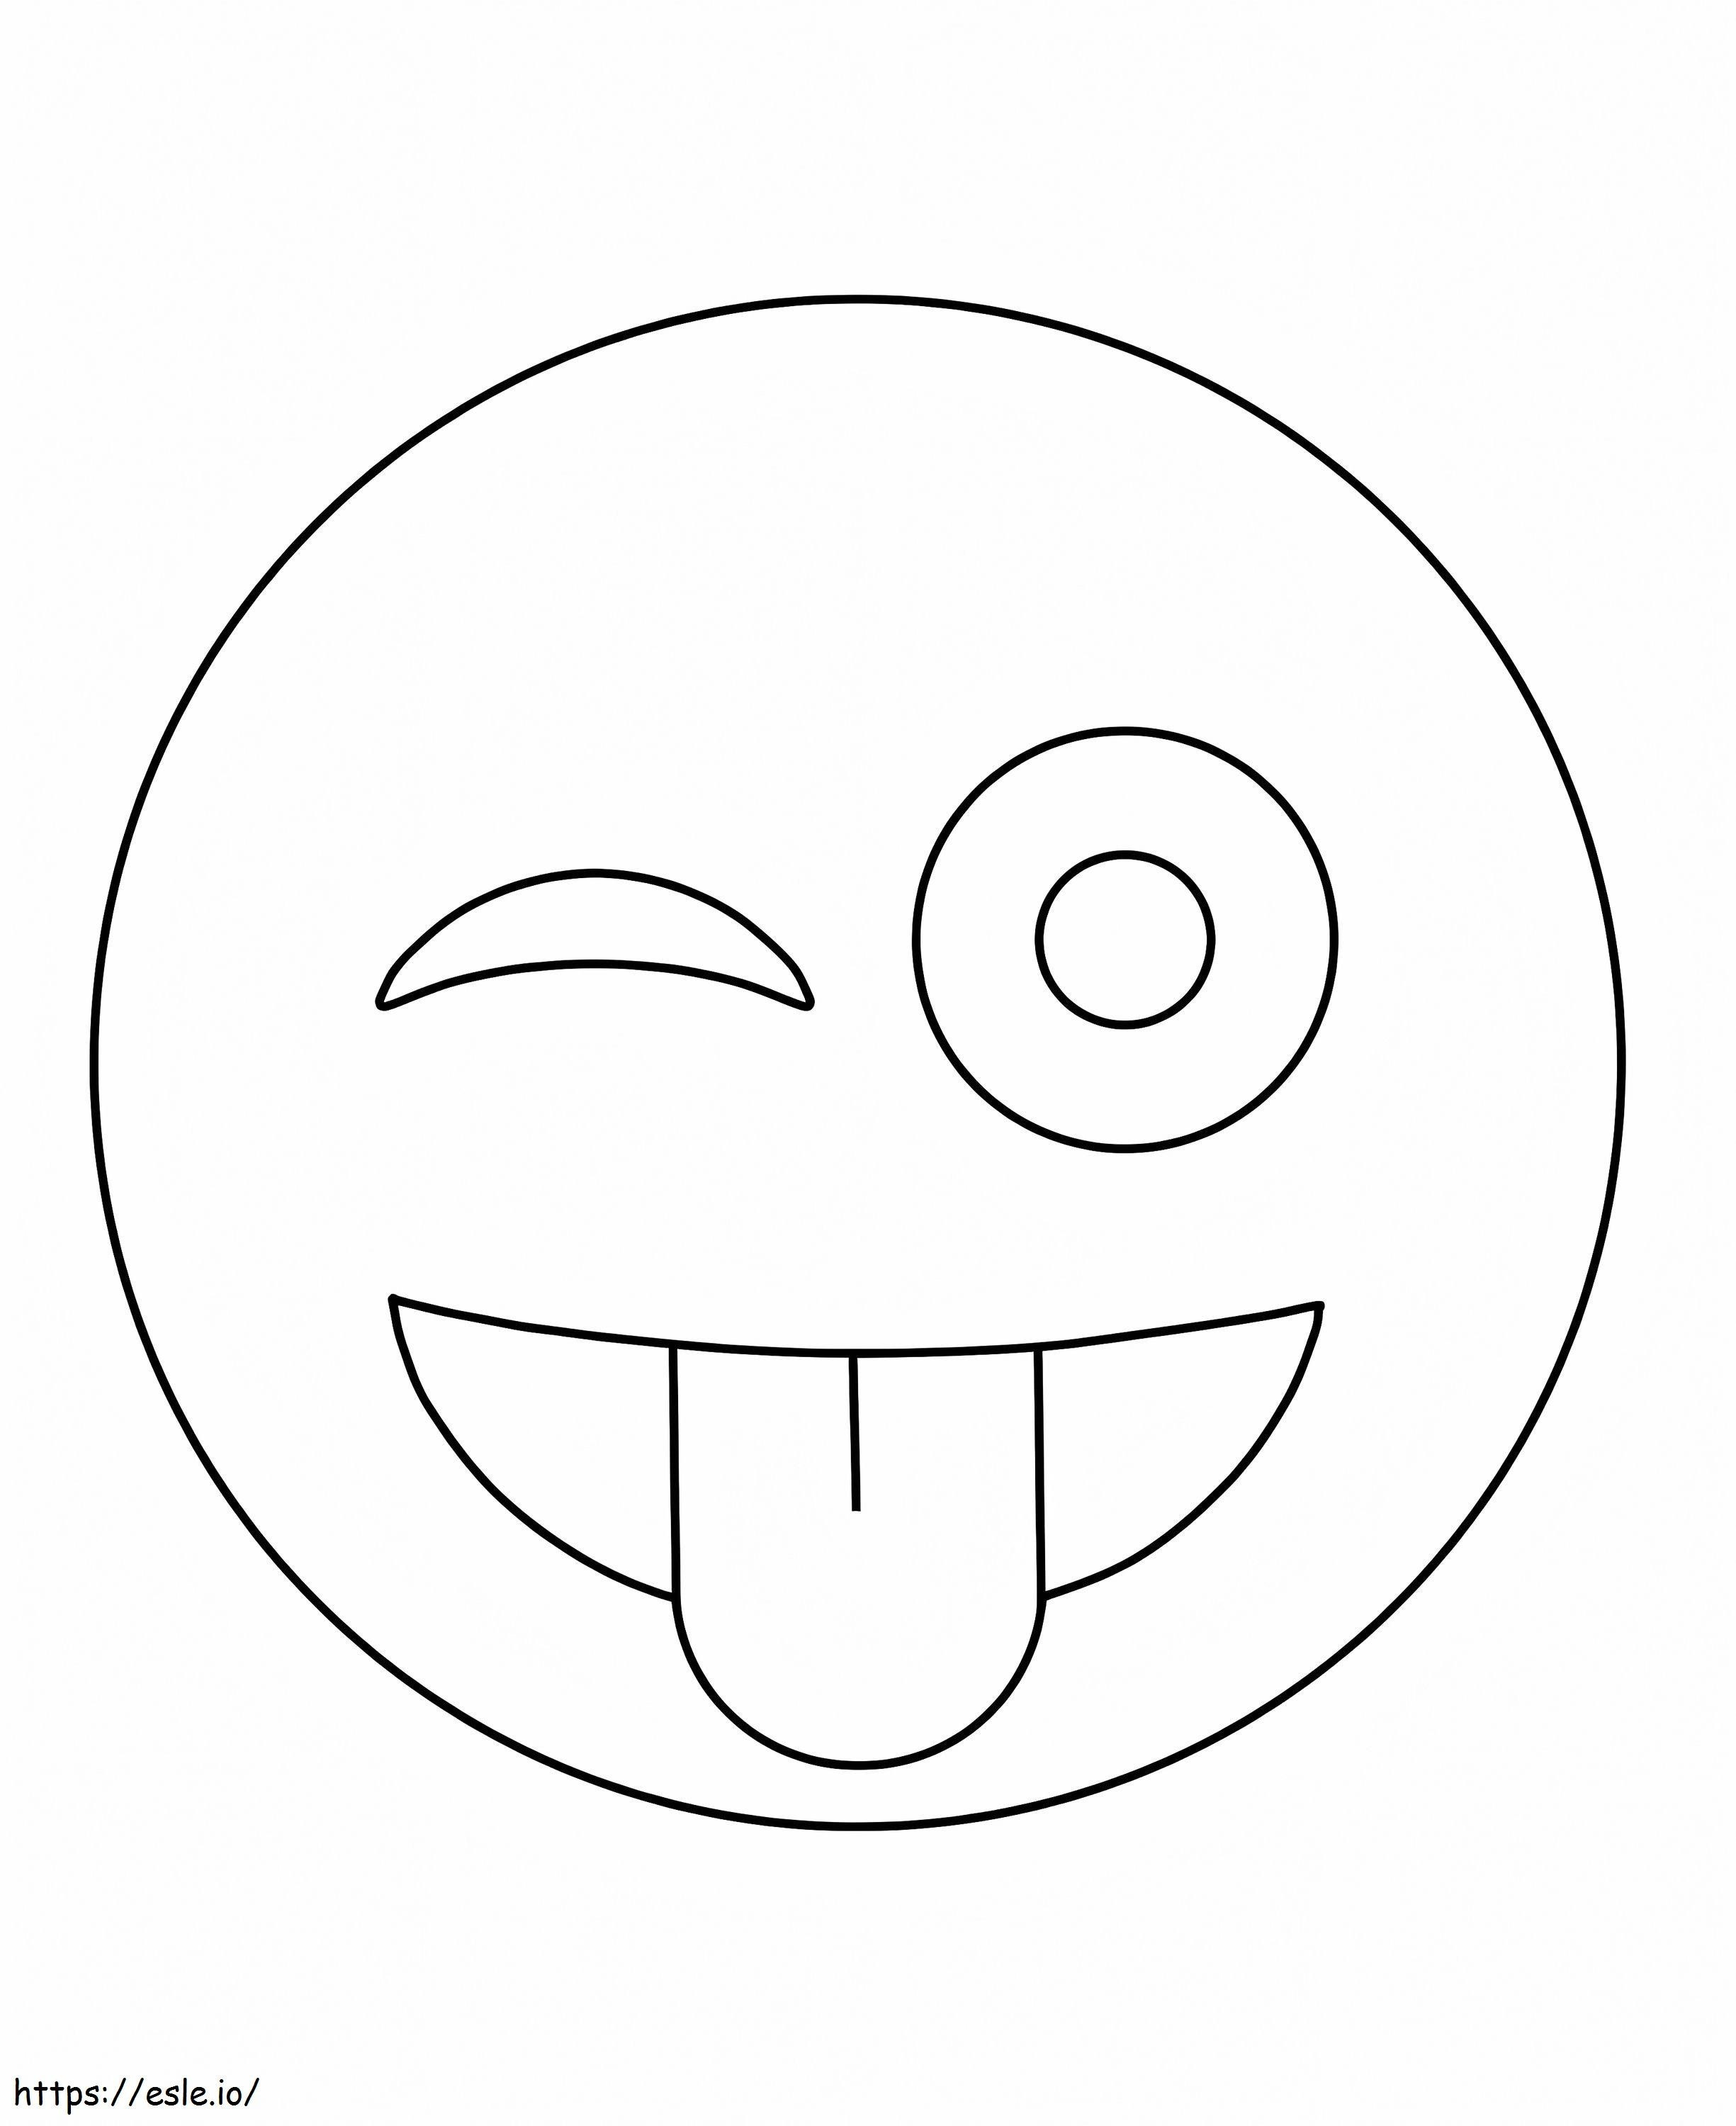 Coloriage Emoji visage clin d'oeil à imprimer dessin